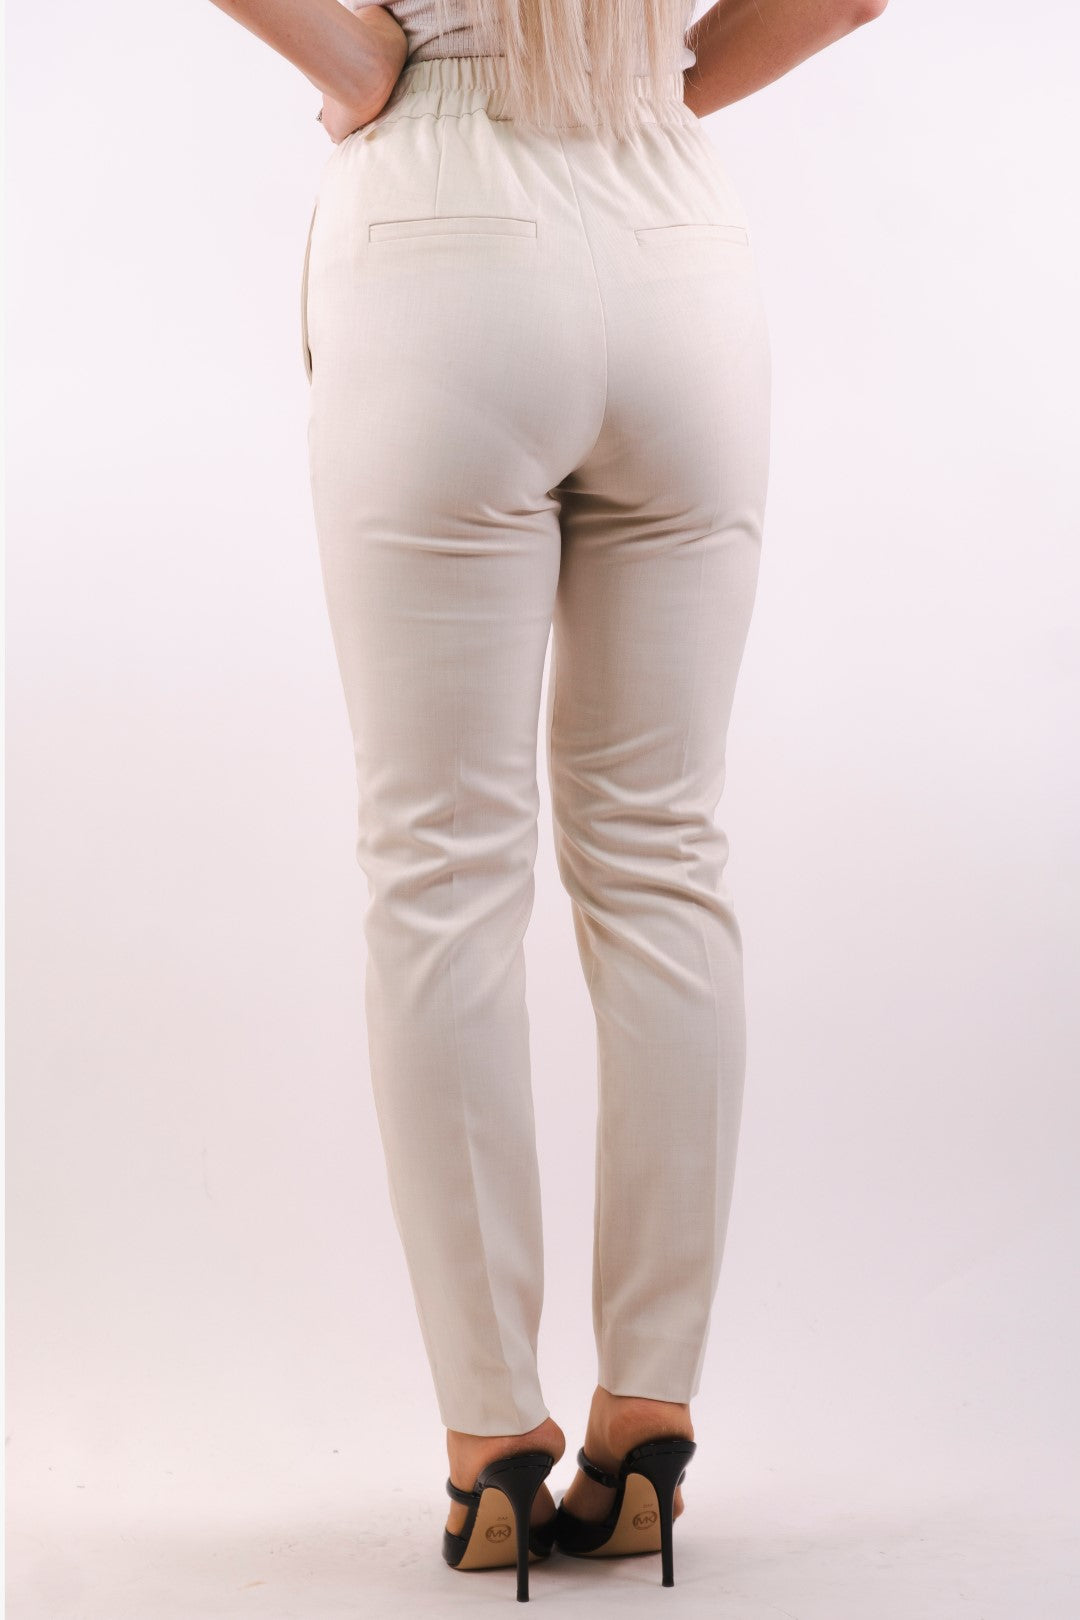 Inwear Pants in Beige color